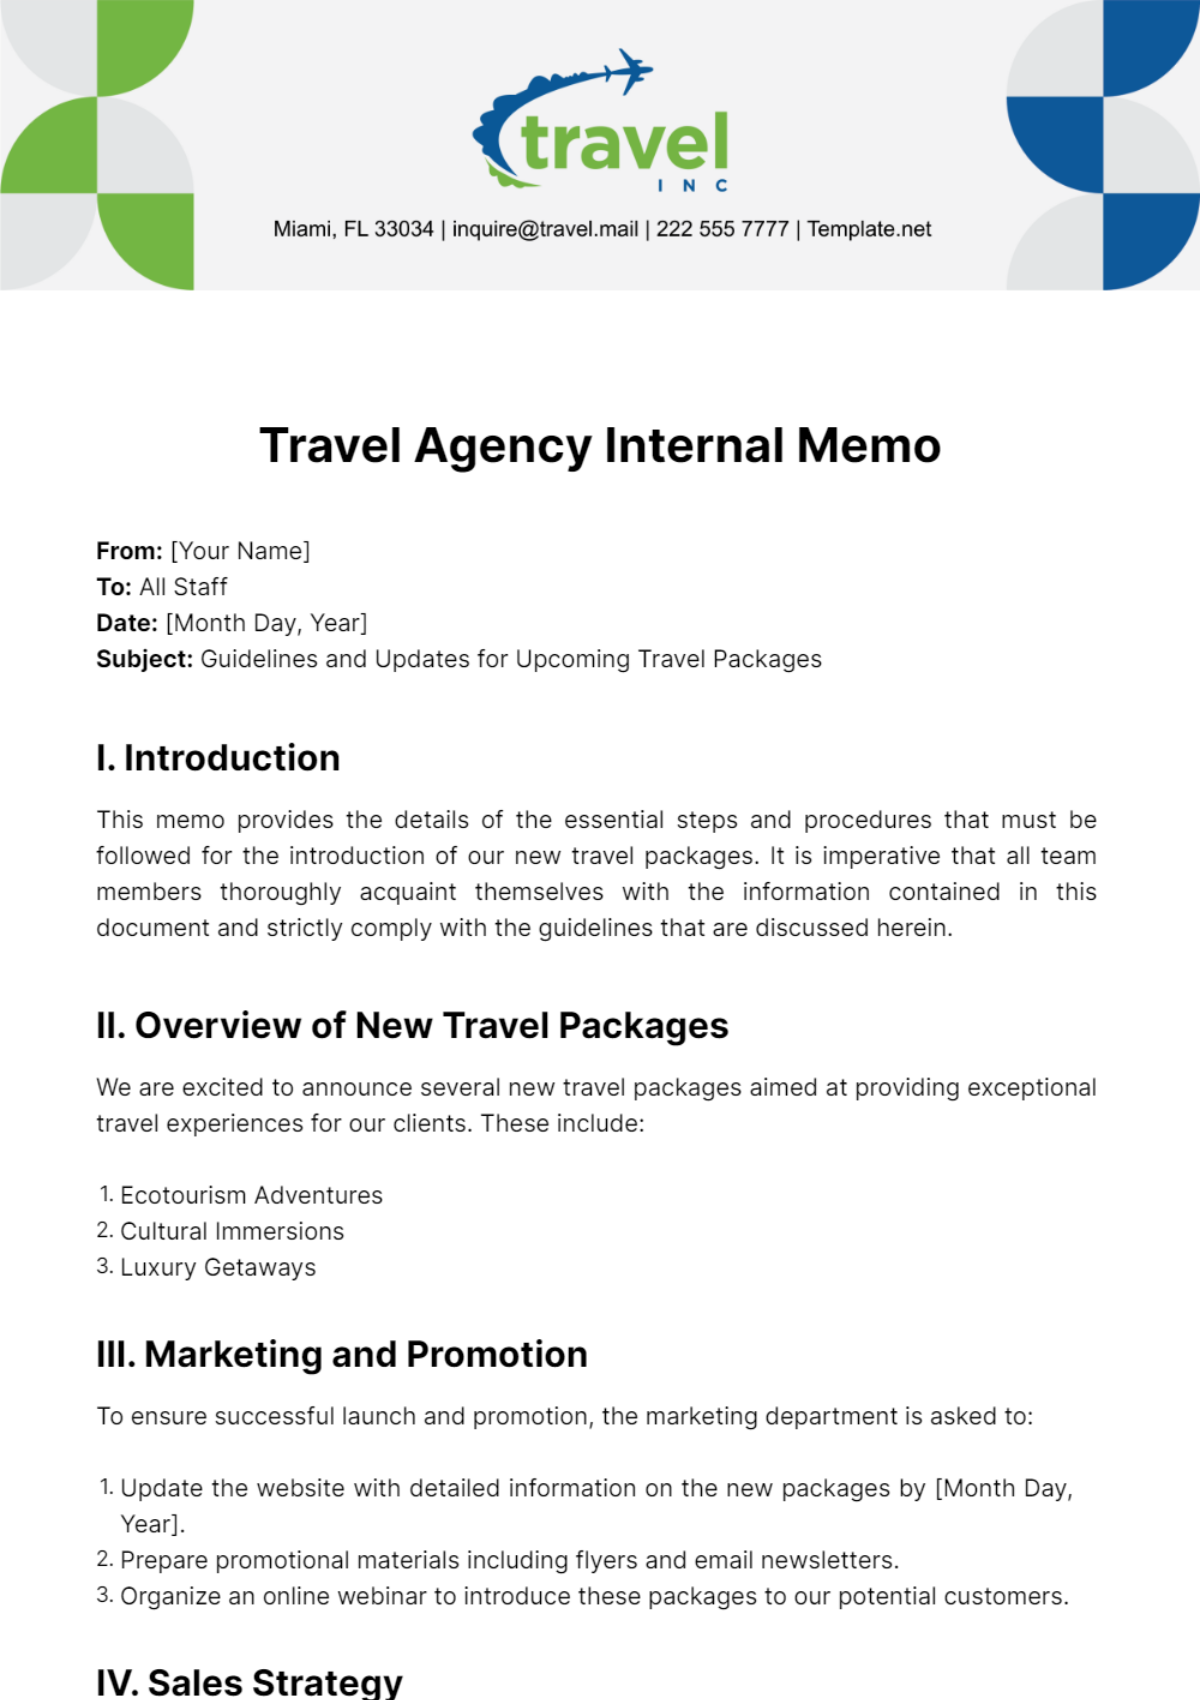 Free Travel Agency Internal Memo Template